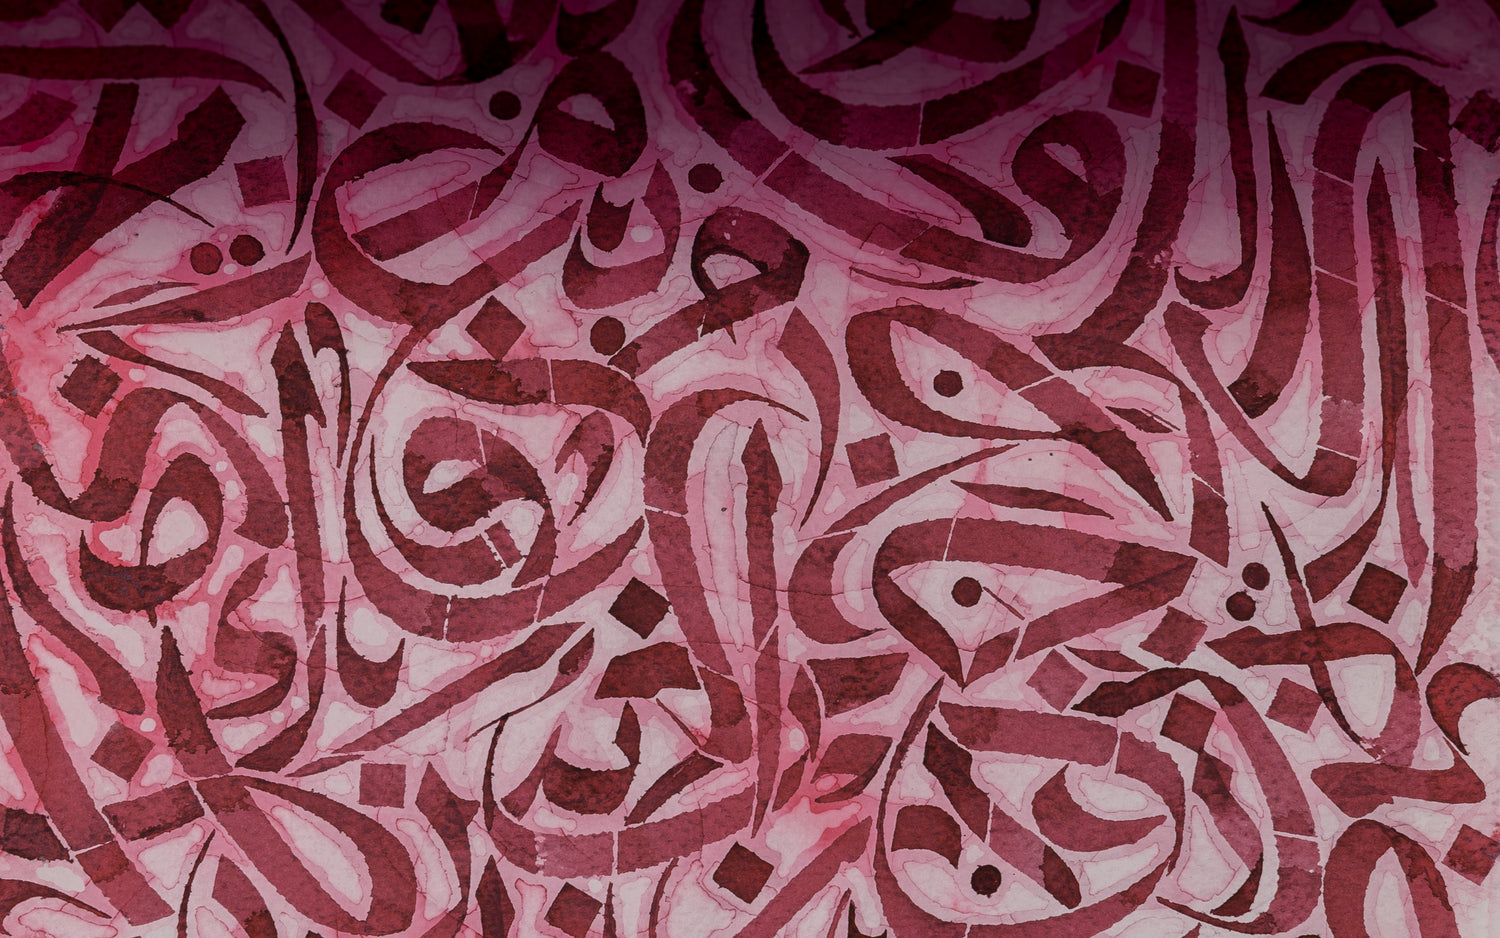 Arabic calligraphy art in Thuluth script, Abjad Alphabet, in Rosewood Burgundy.